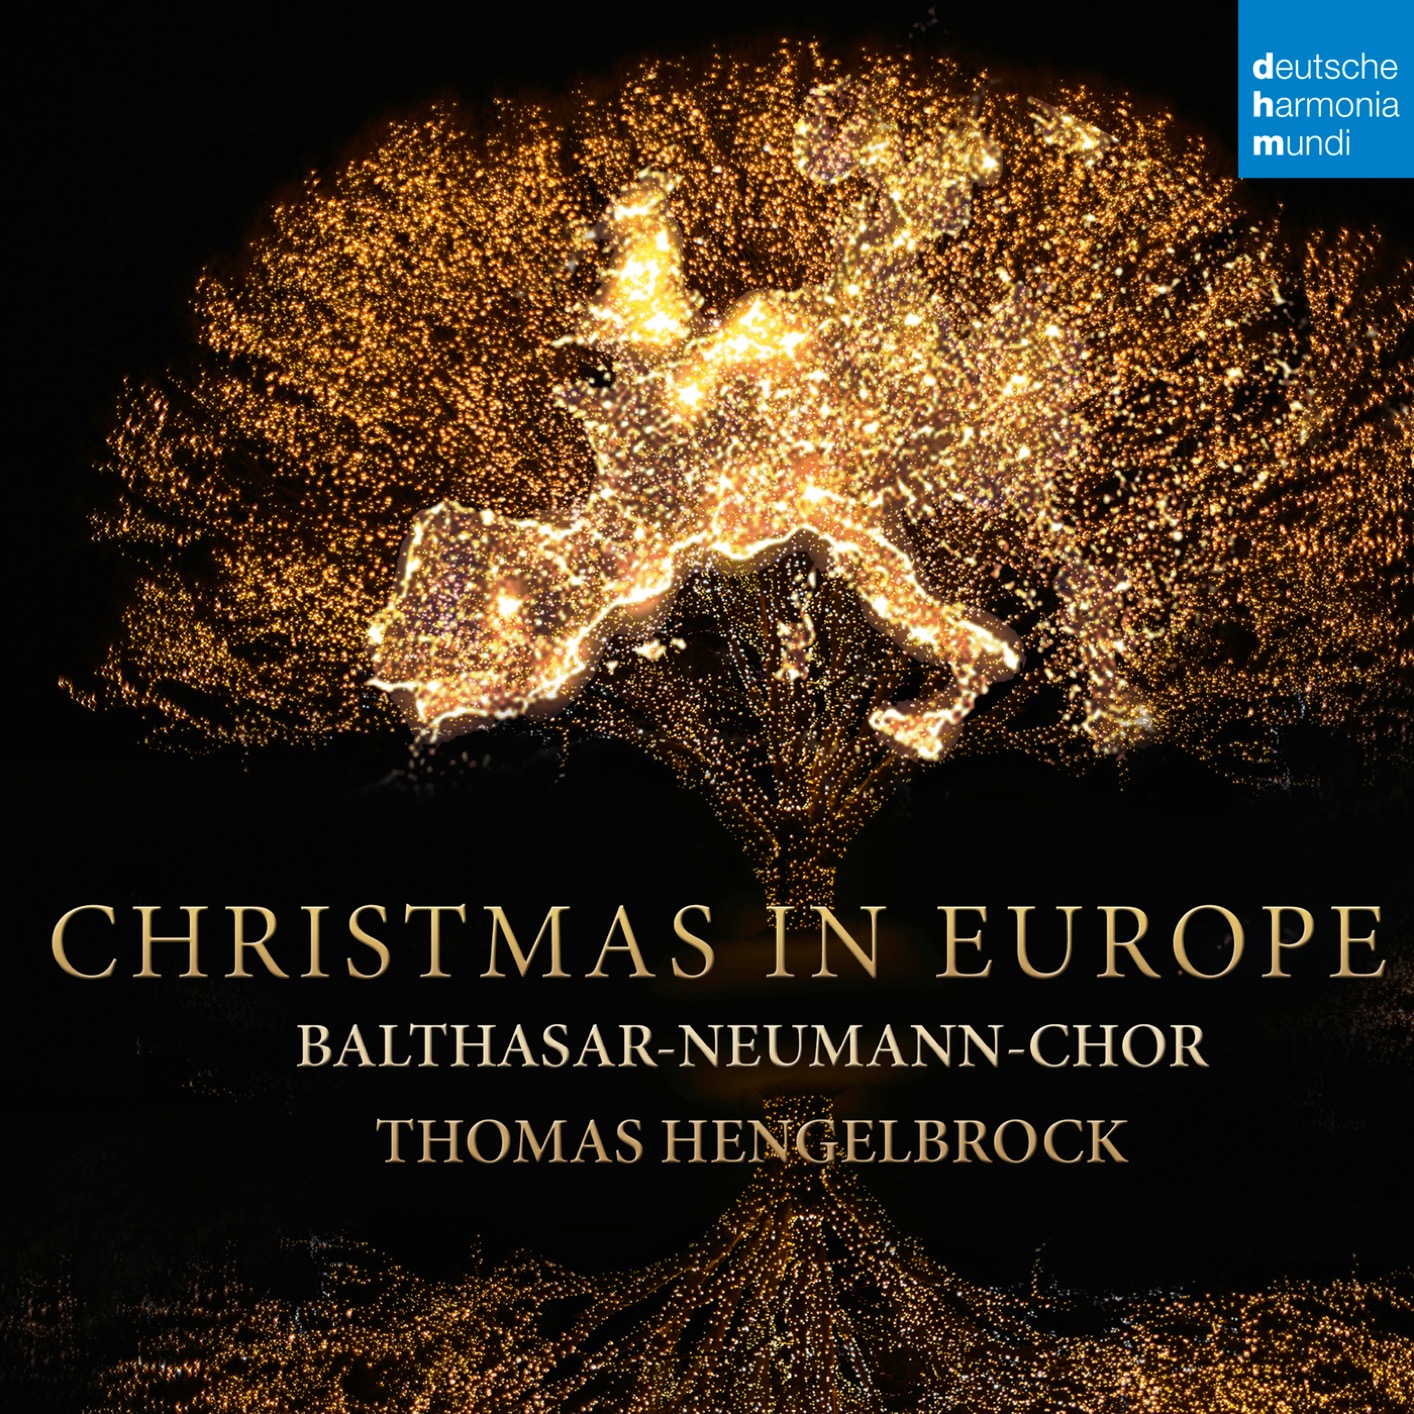 Thomas Hengelbrock & Balthasar-Neumann-Chor - Christmas in Europe (2020) [FLAC 24bit/96kHz]